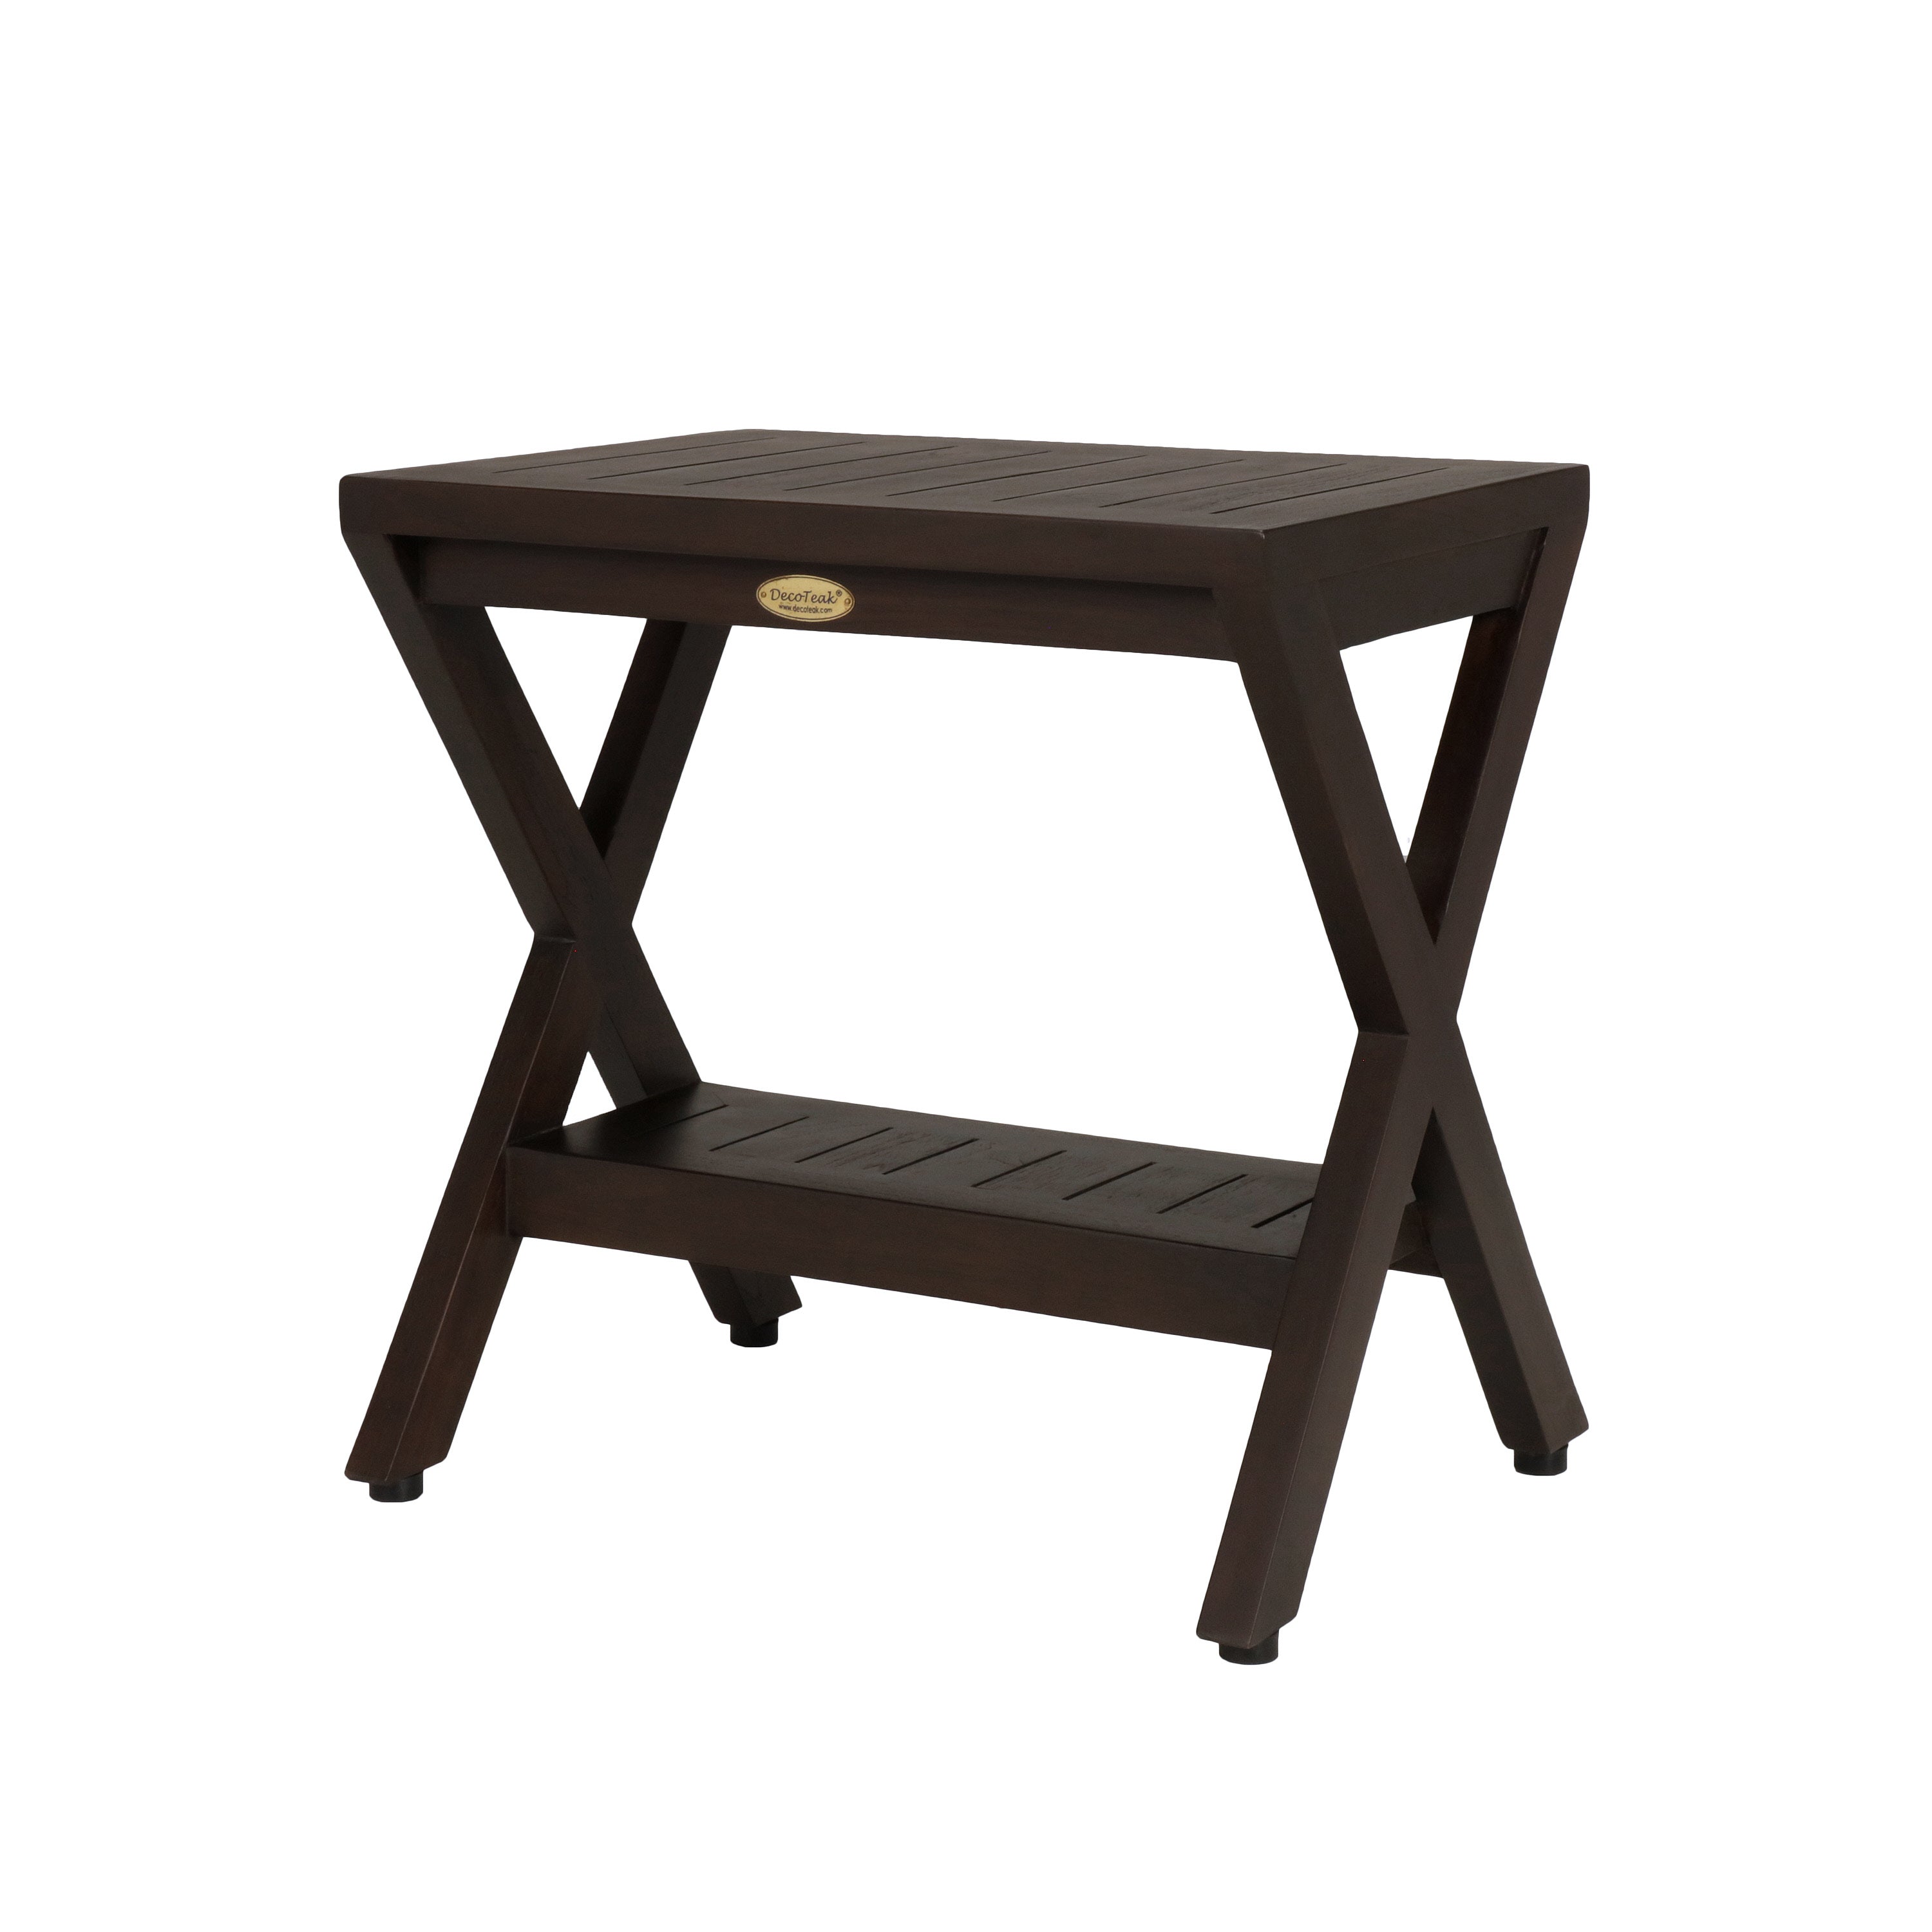 DecoTeak® Obliquity® 18" Teak Wood Shower Bench with Shelf in Woodland Brown Finish